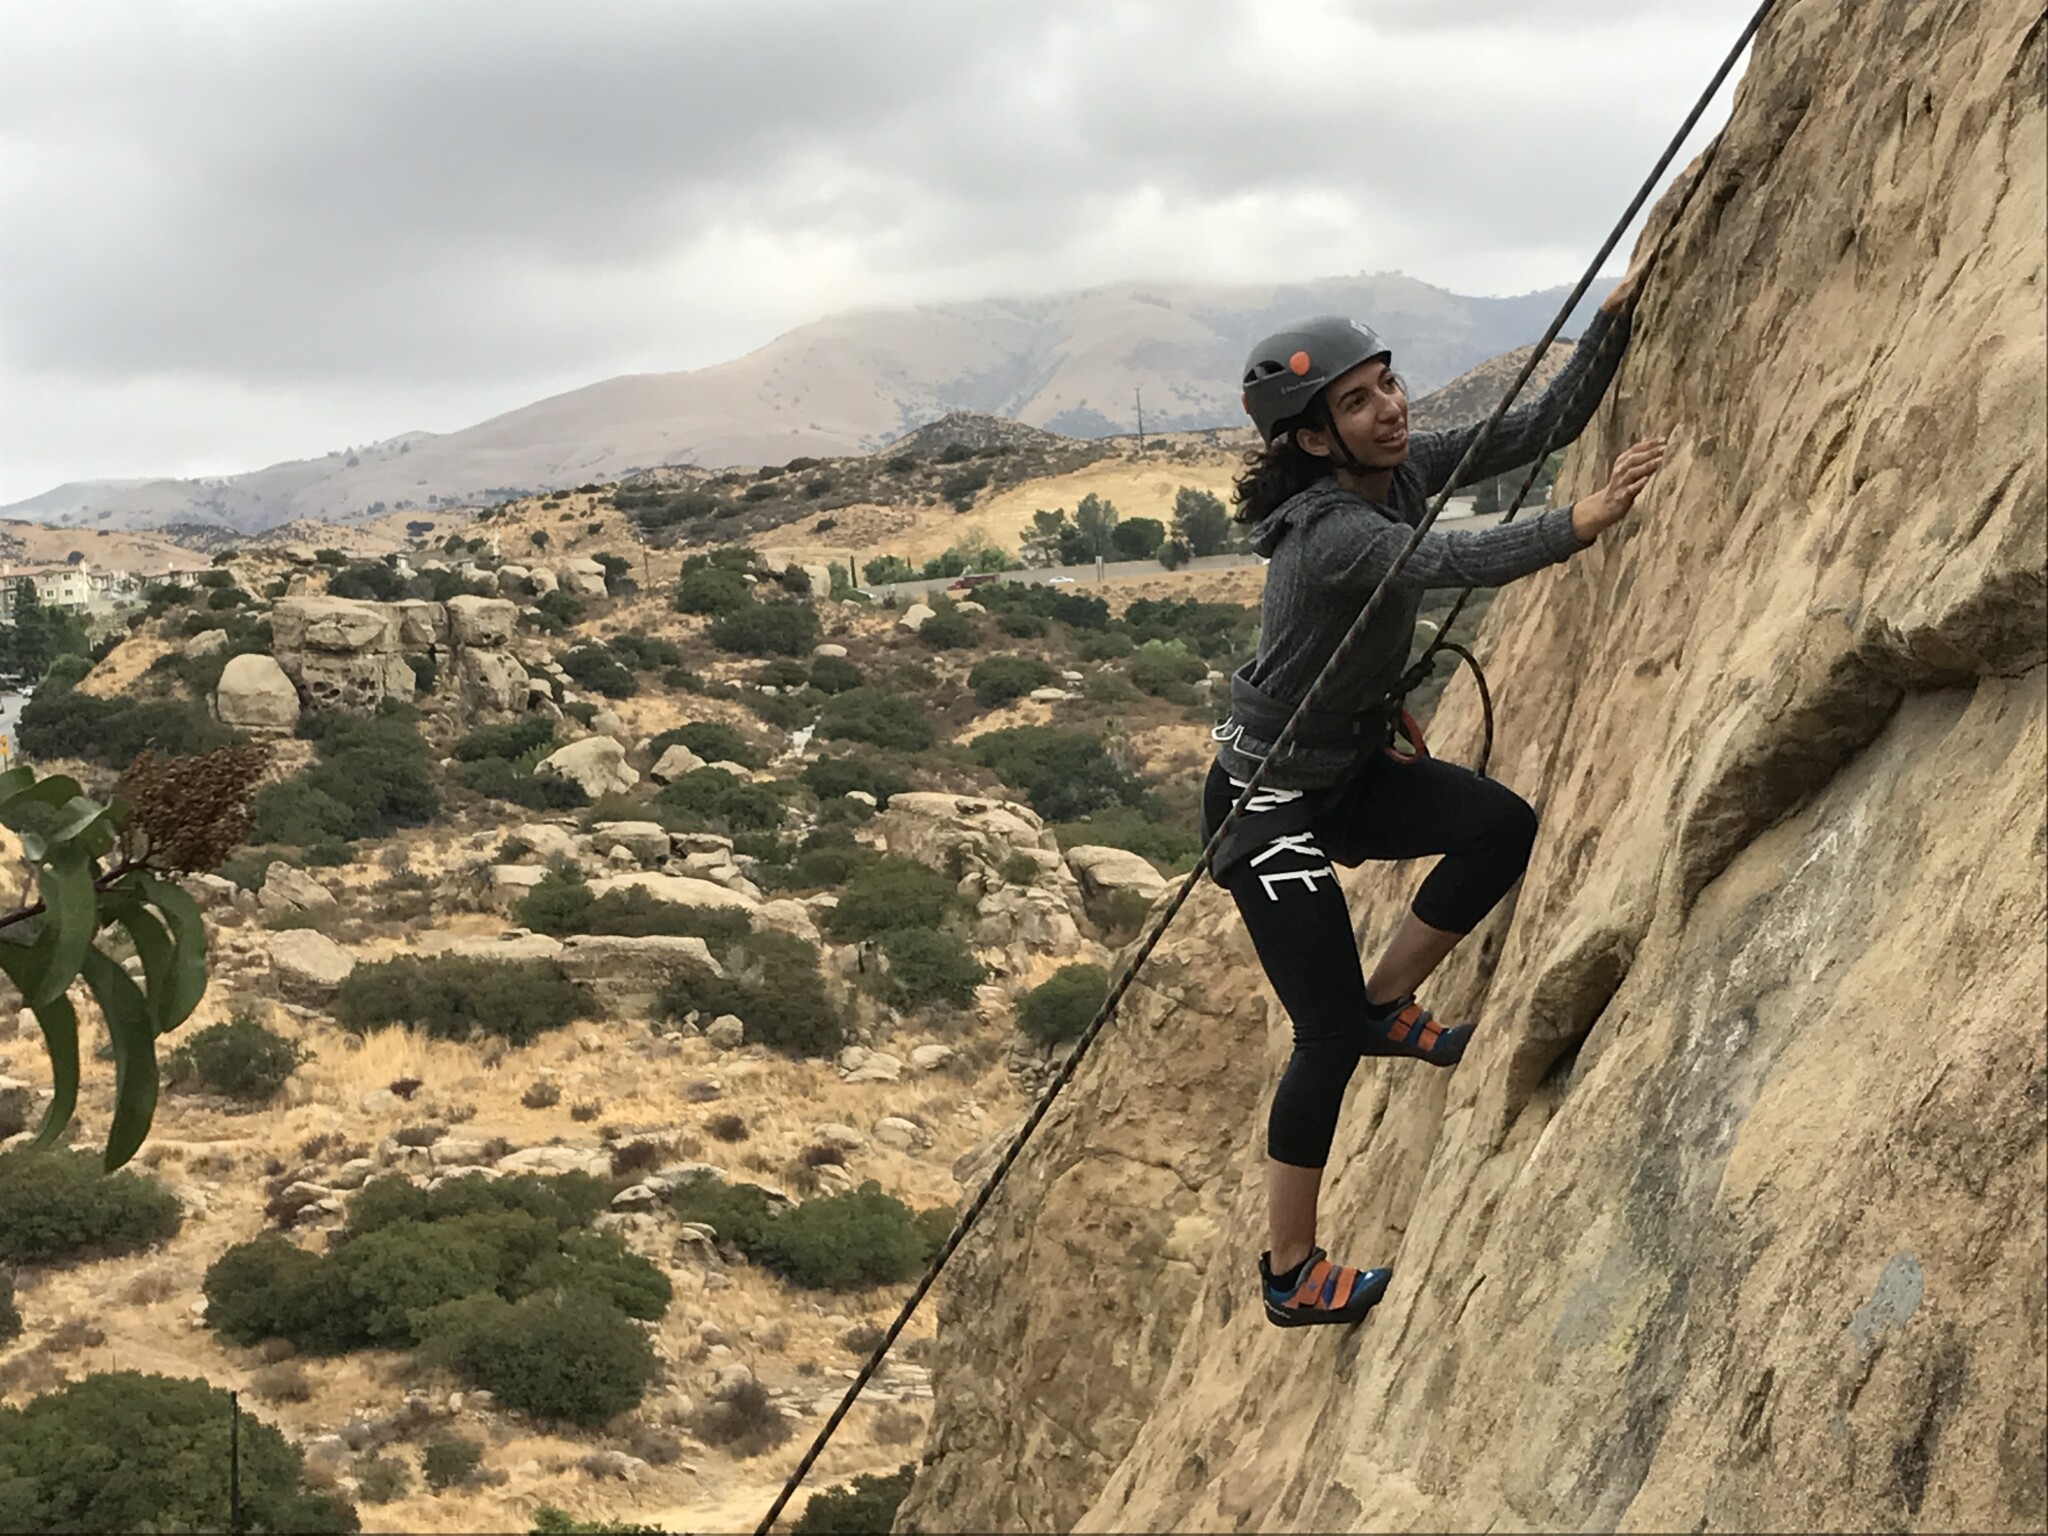 https://rockclimbeveryday.com/wp-content/uploads/2022/11/Rock-Climbing-Adventure-Class-Los-Angeles-California.jpg